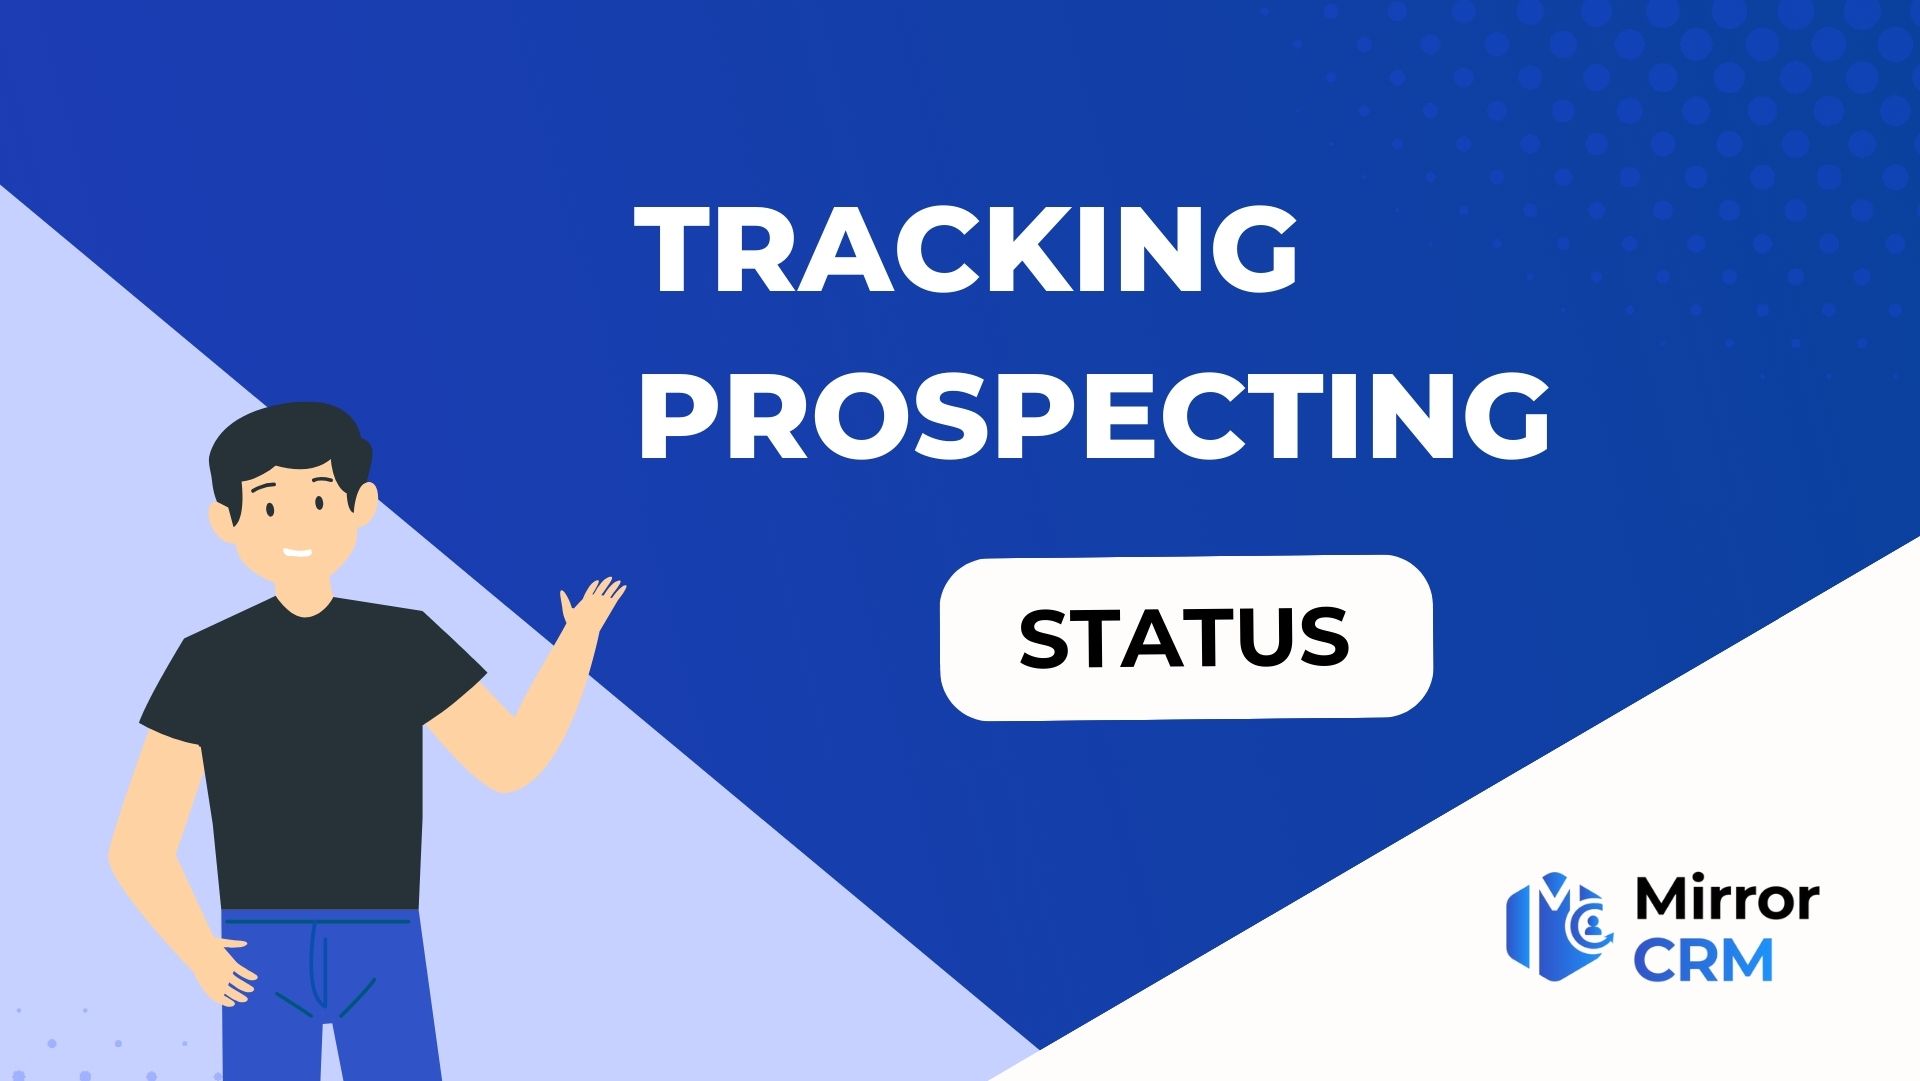 MirrorCRM: Tracking prospecting status